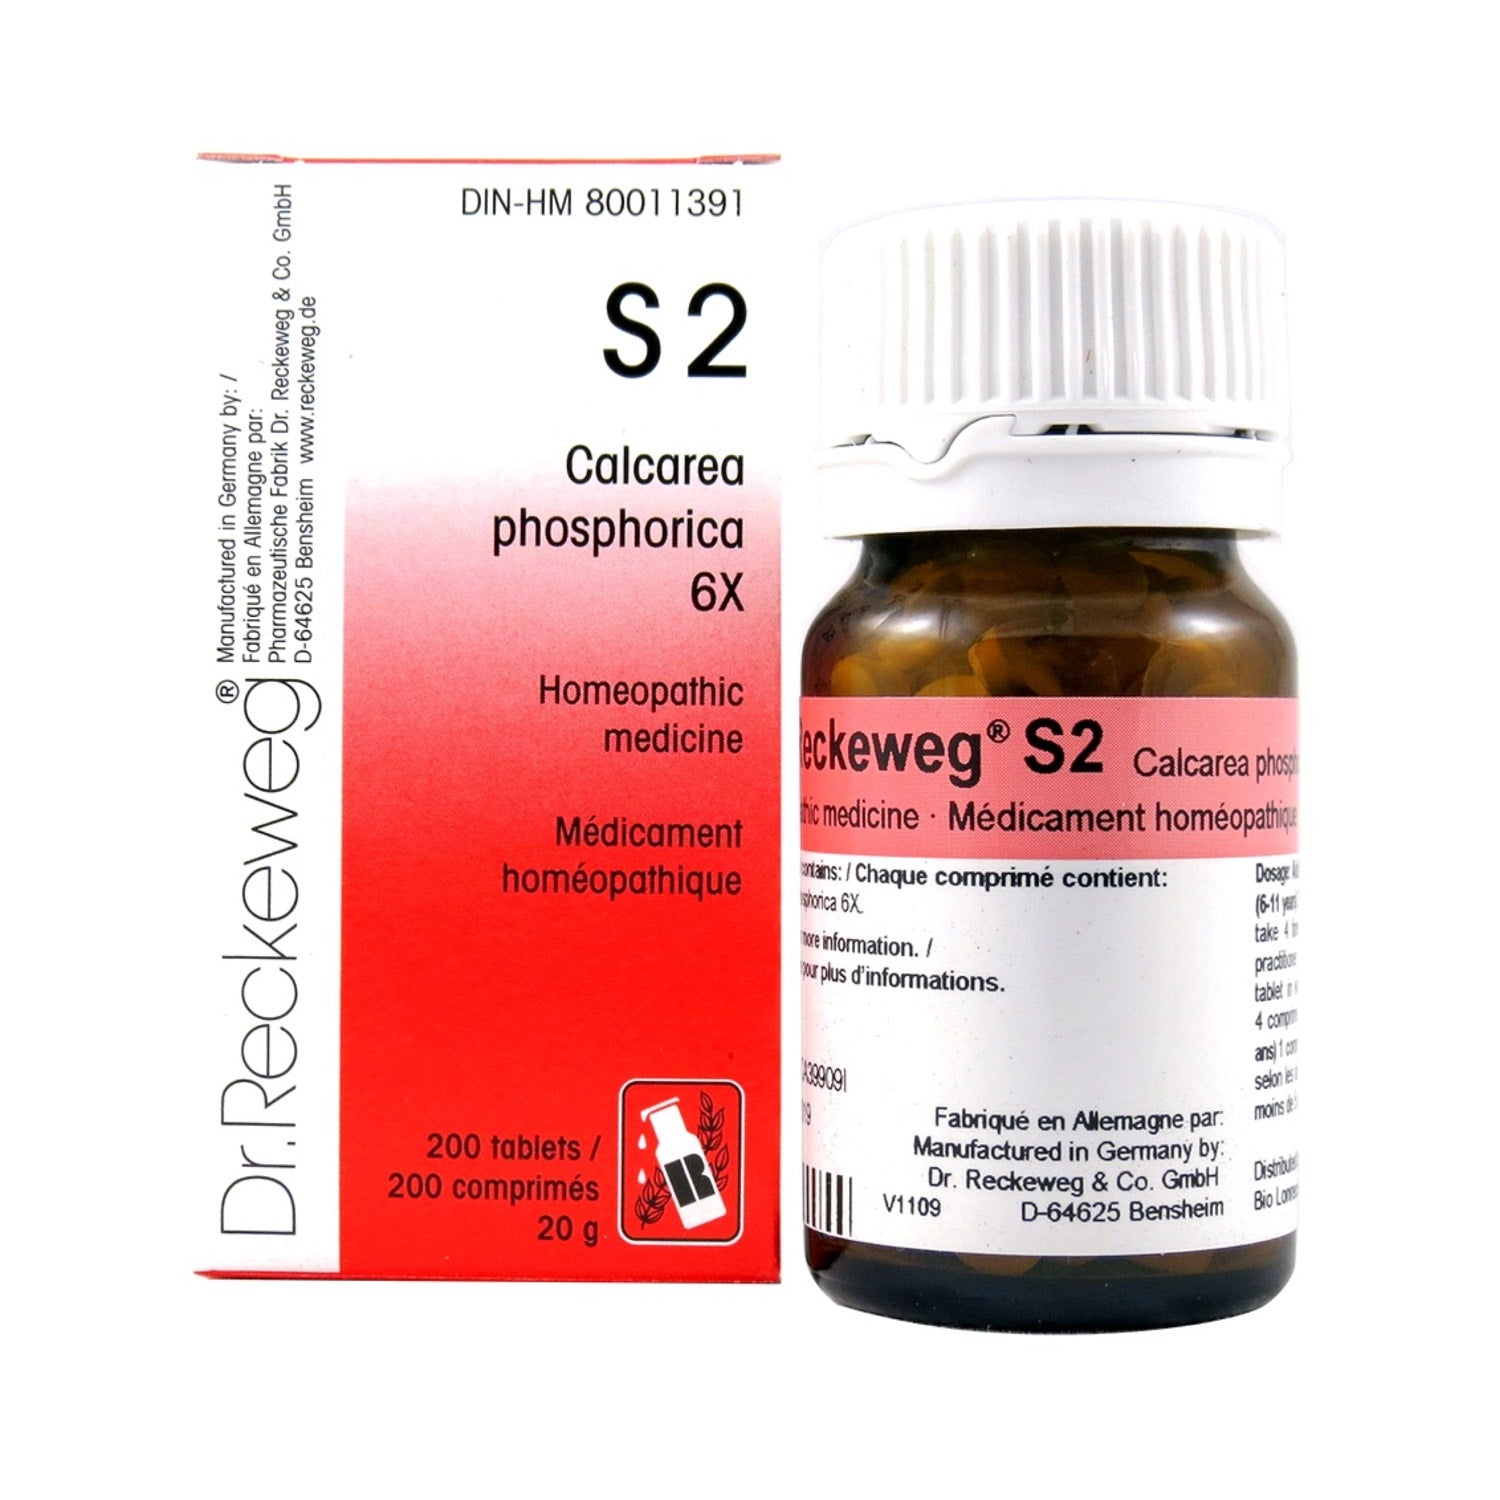 S2 Calcarea phosphorica Homeopathic medicine – Schuessler salt  6X 200 tablets (20 g) - iwellnessbox